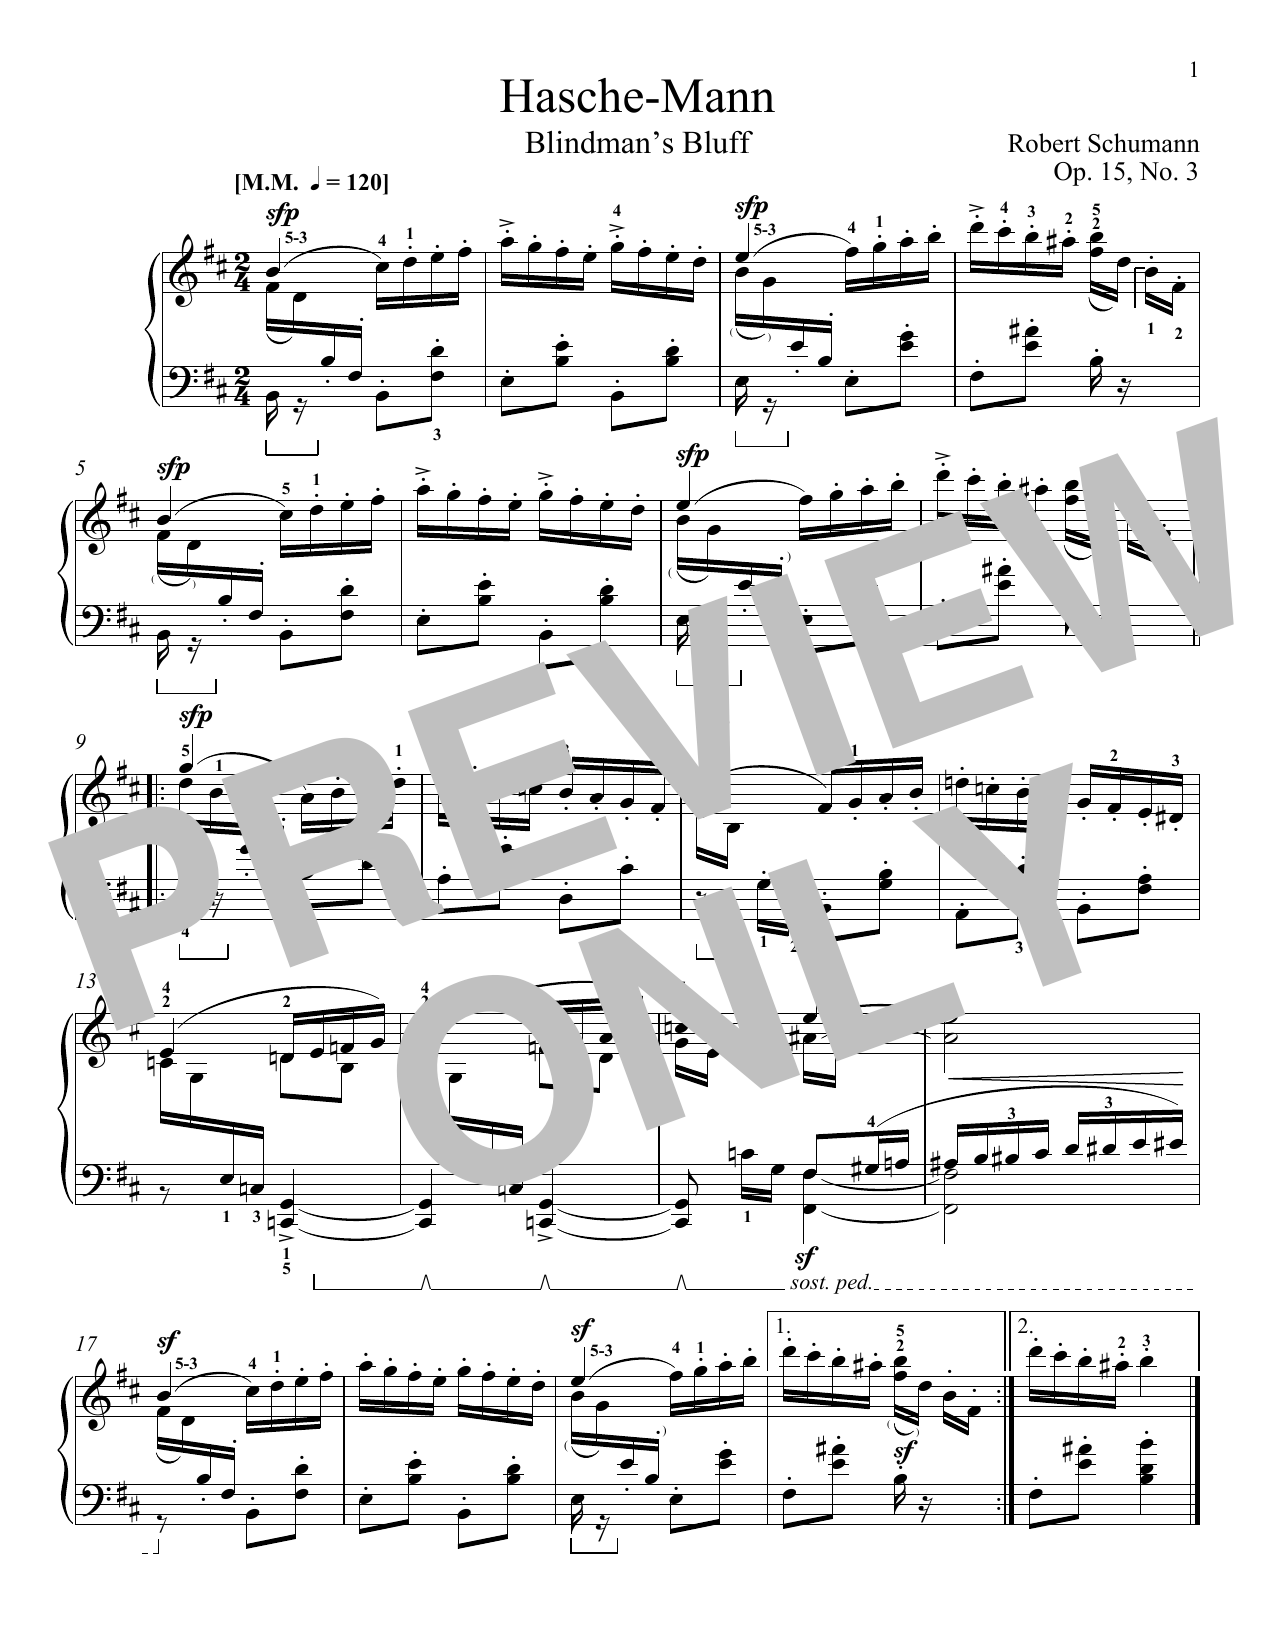 Robert Schumann Blindman's Bluff, Op. 15, No. 3 Sheet Music Notes & Chords for Piano - Download or Print PDF